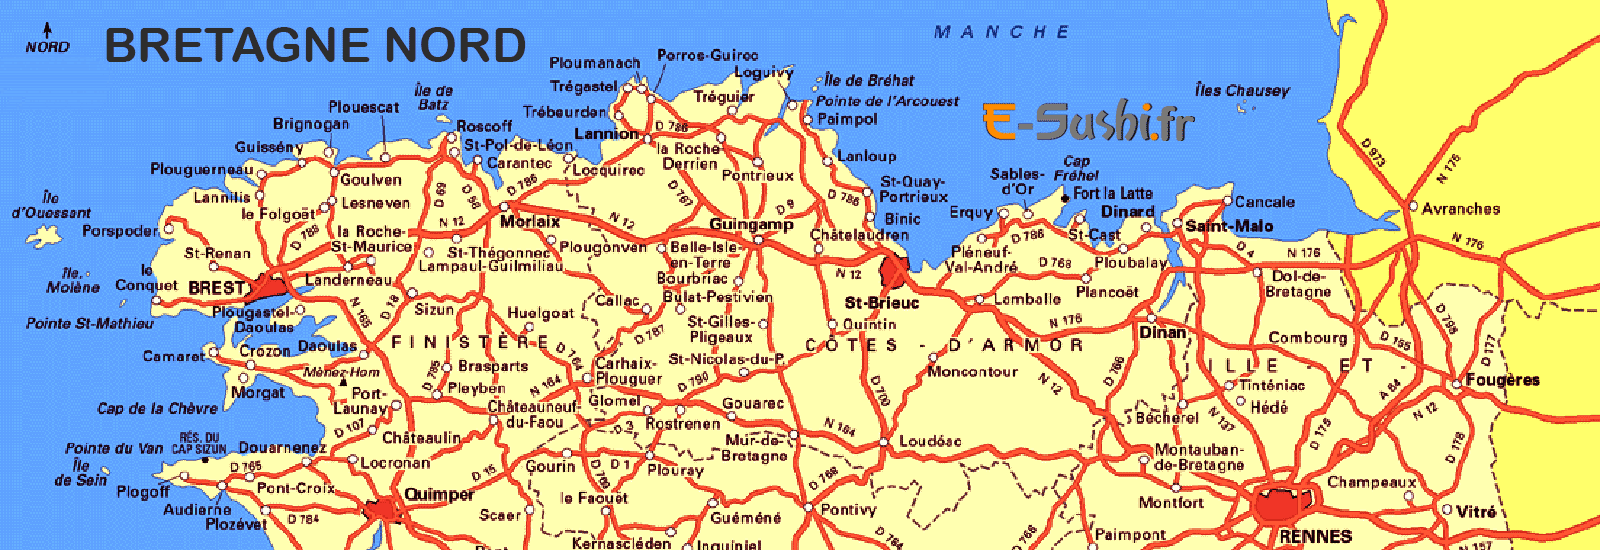 Bretagne Nord - Map - Carte